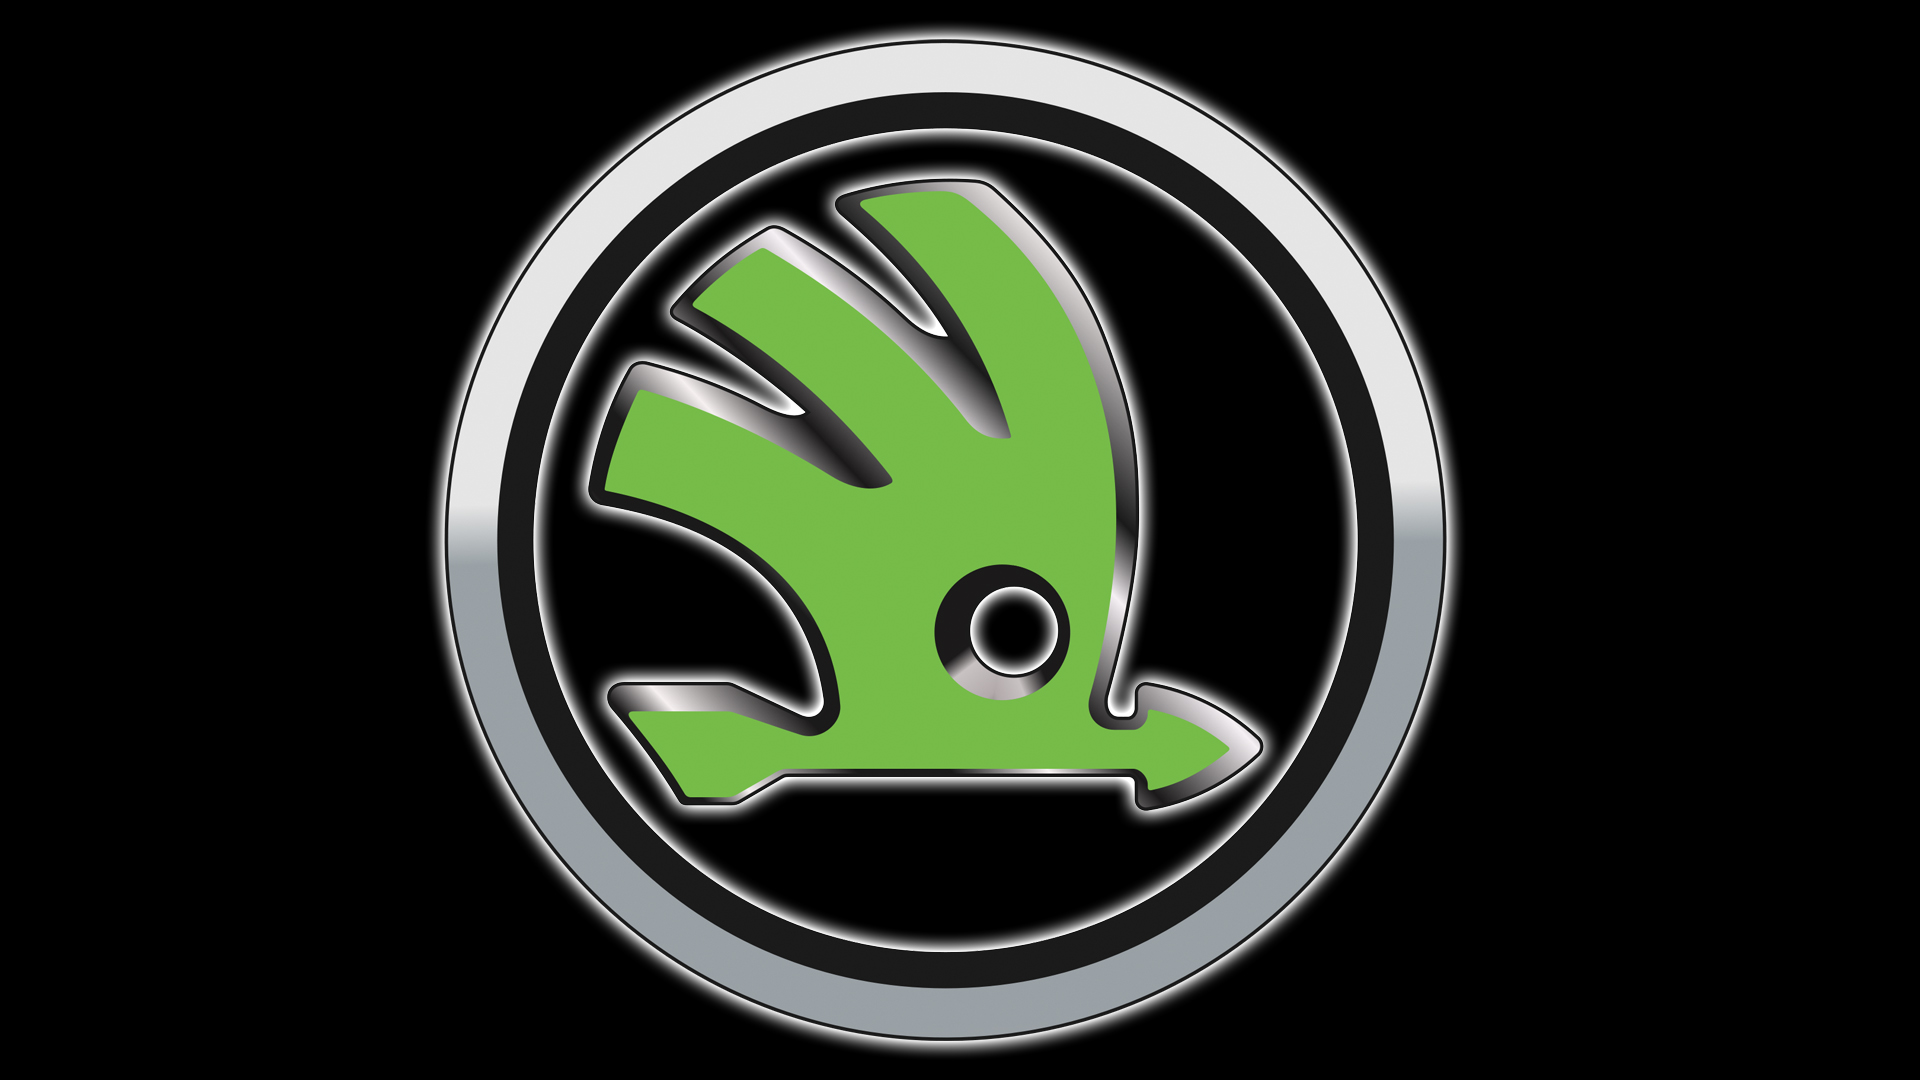 Skoda Emblem